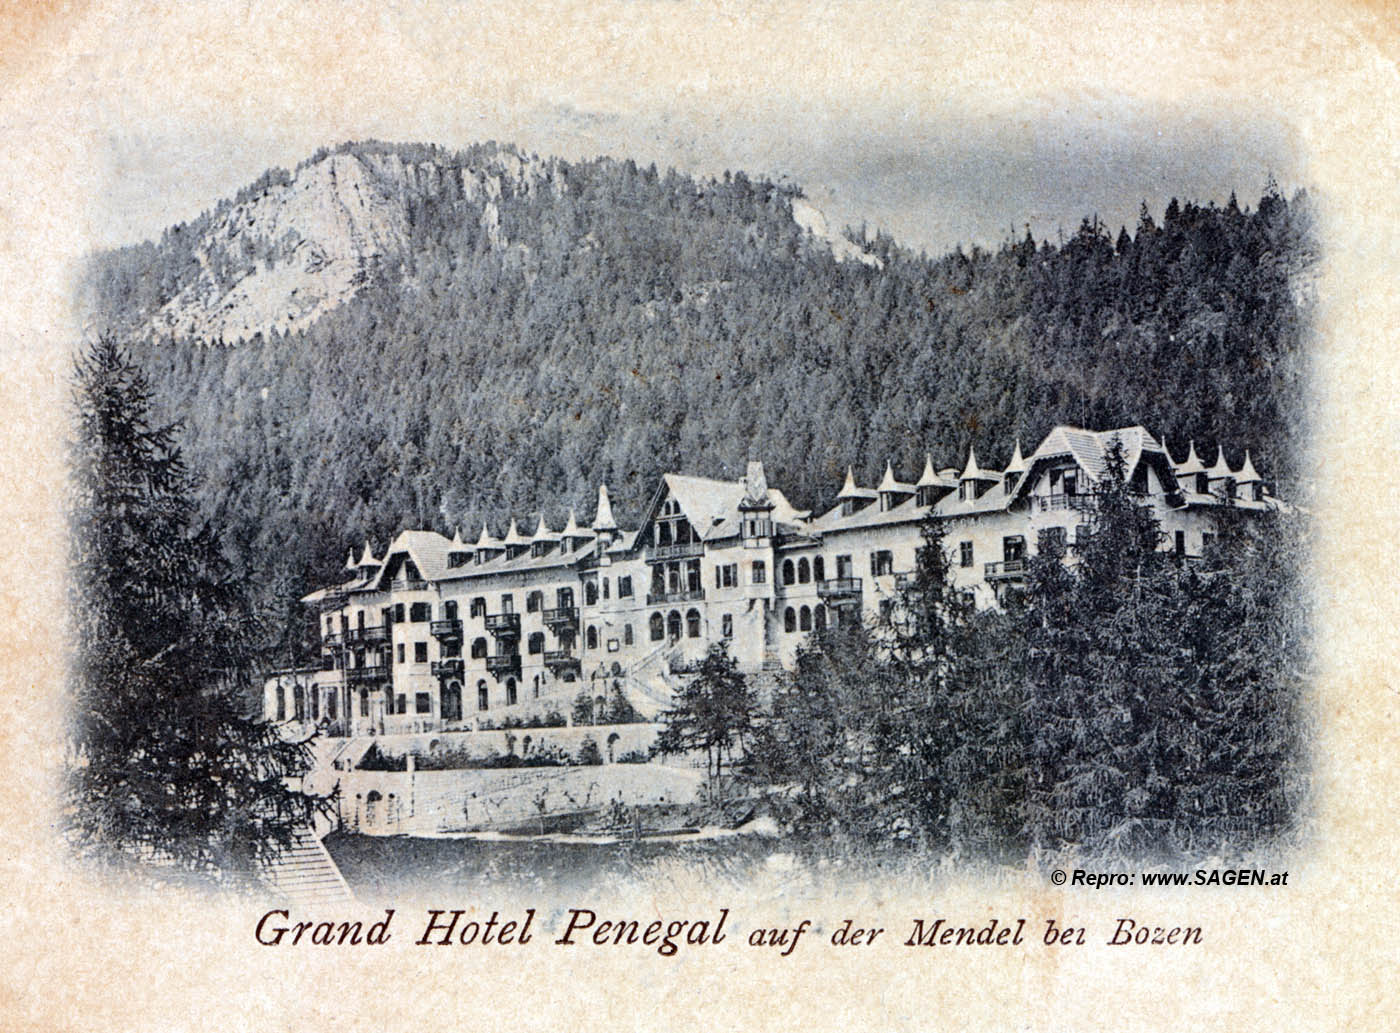 Grand Hotel Penegal auf der Mendel bei Bozen